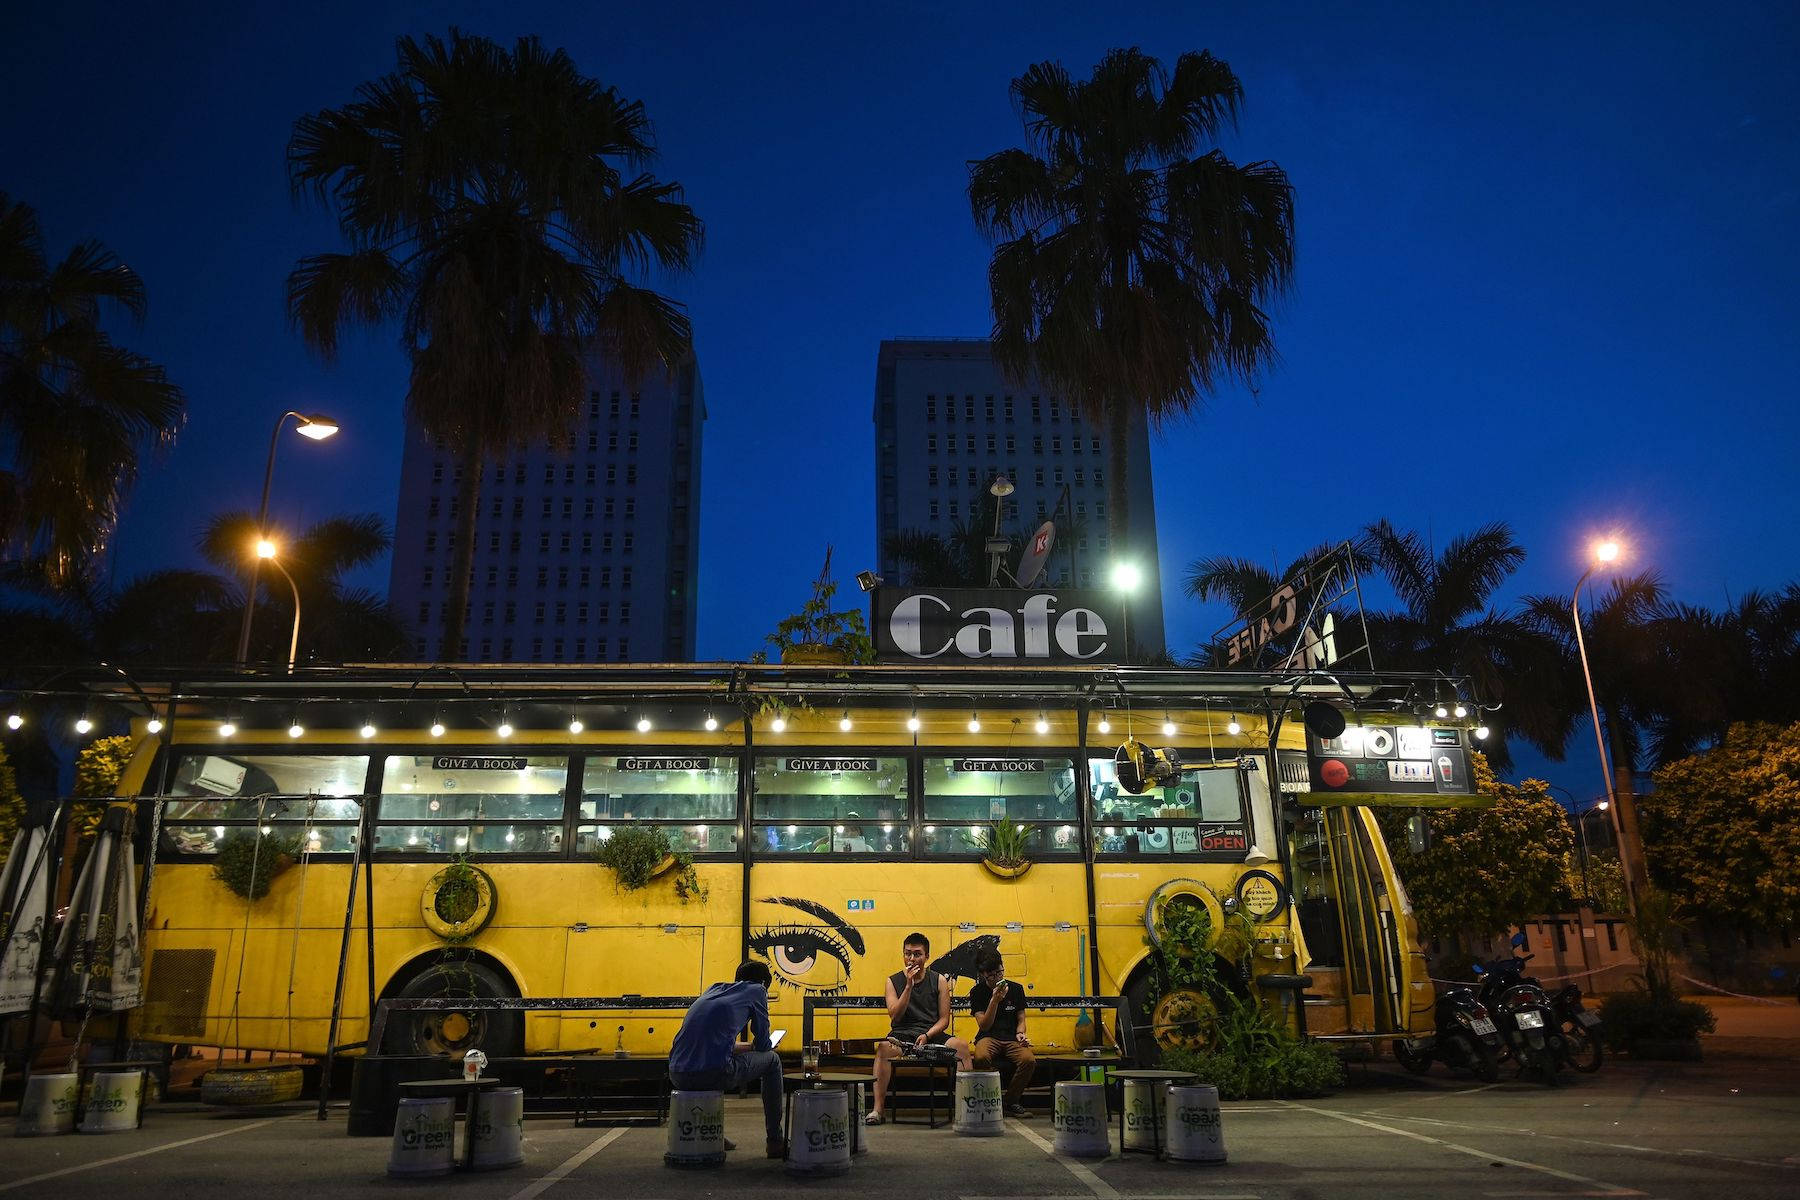 The Hanoi Cafe Bus Background